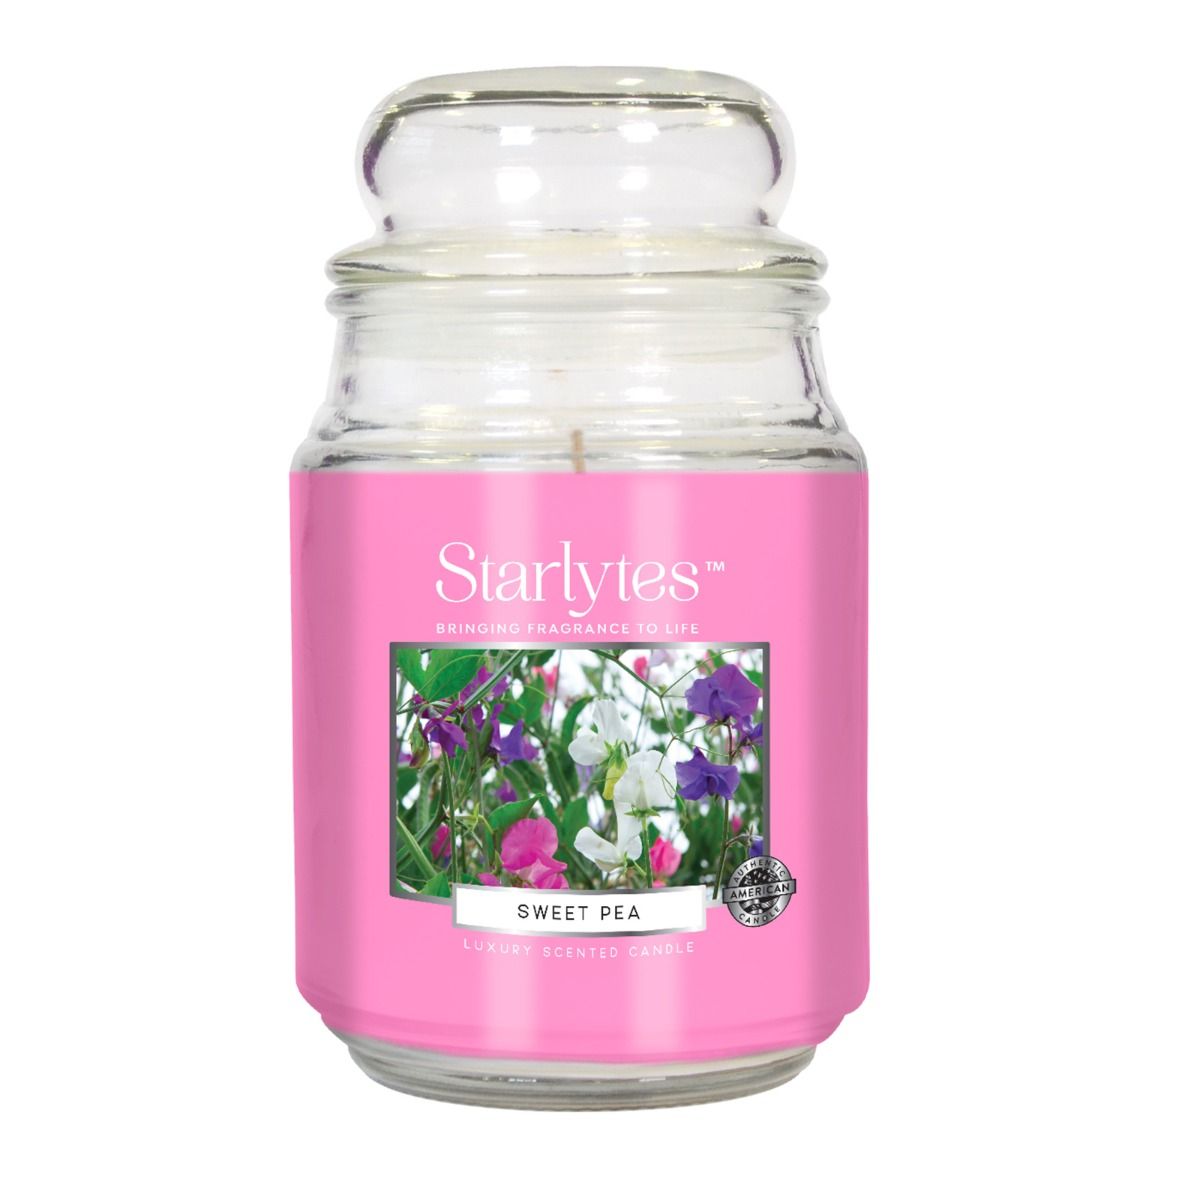 Starlytes 18oz Jar Candle - Sweet Pea